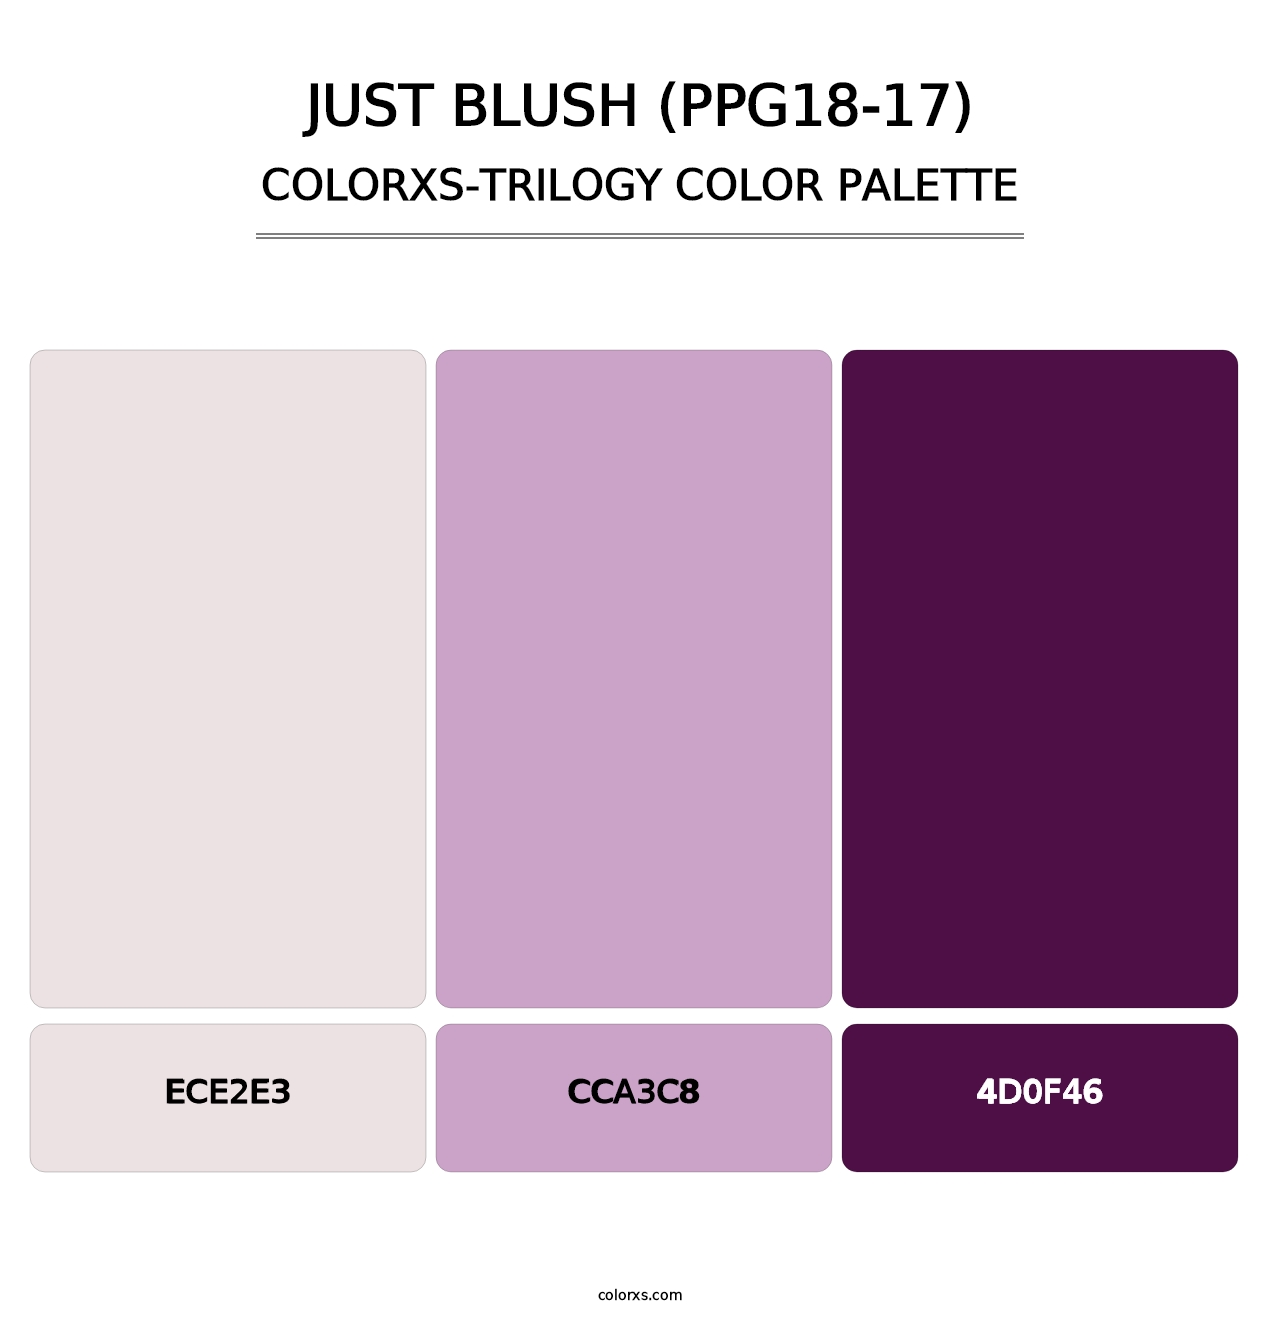 Just Blush (PPG18-17) - Colorxs Trilogy Palette